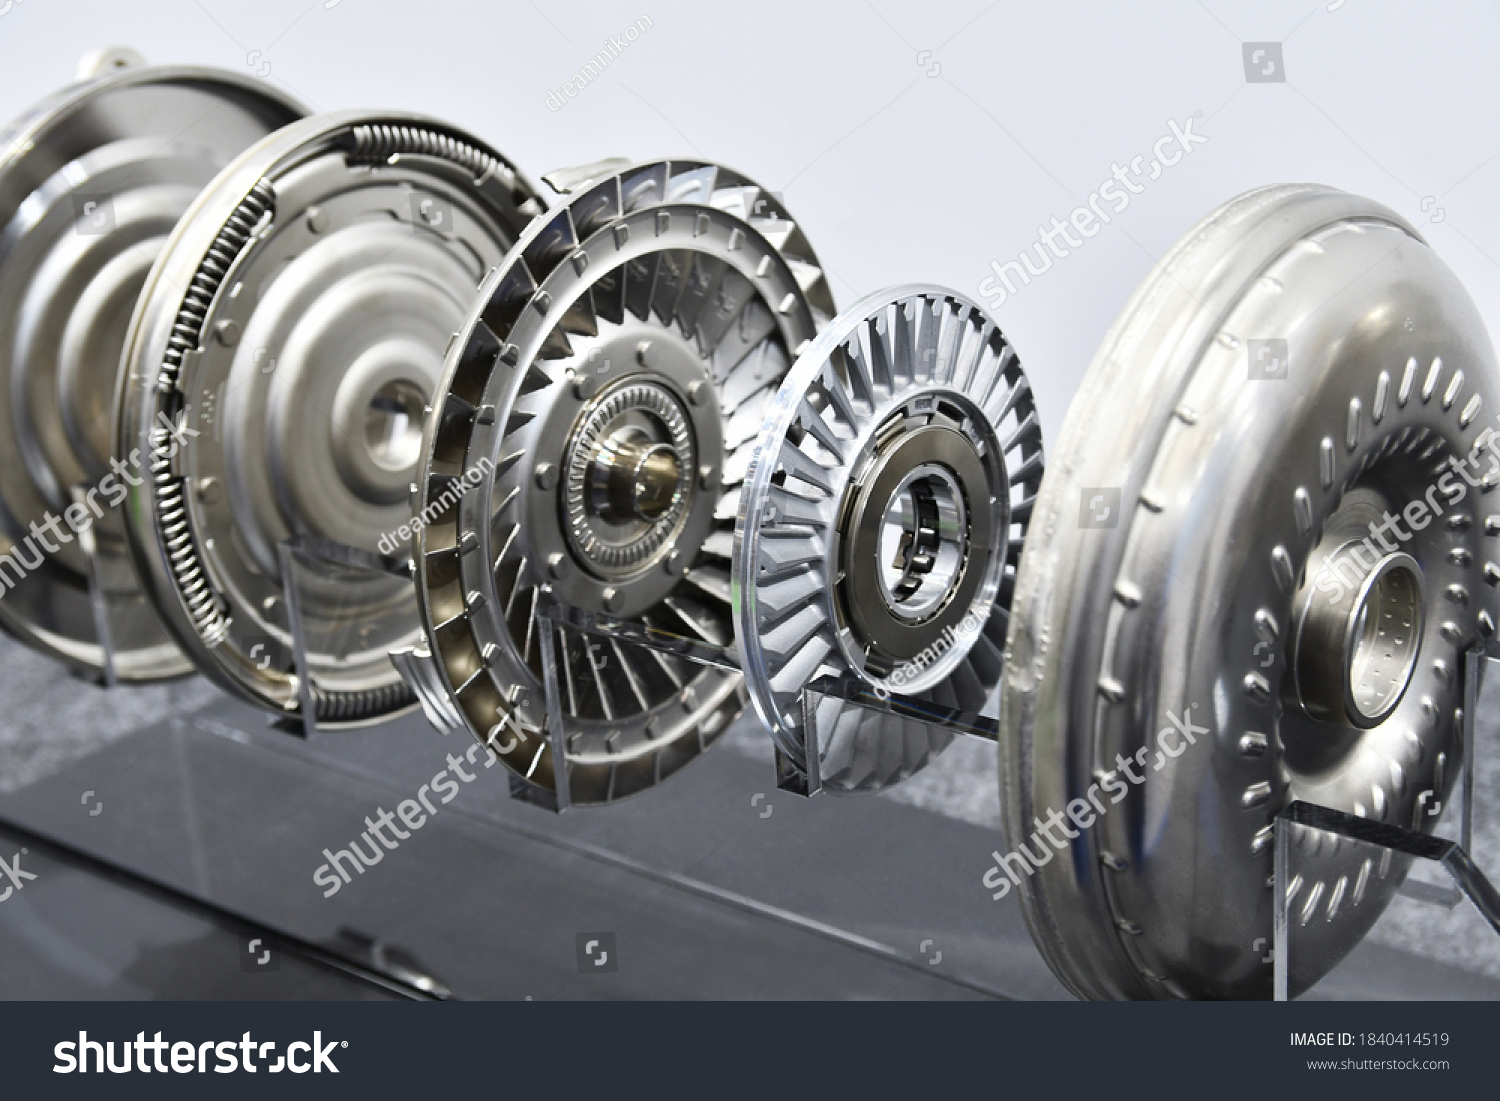 Exhibition of torque converters for automobiles #1840414519